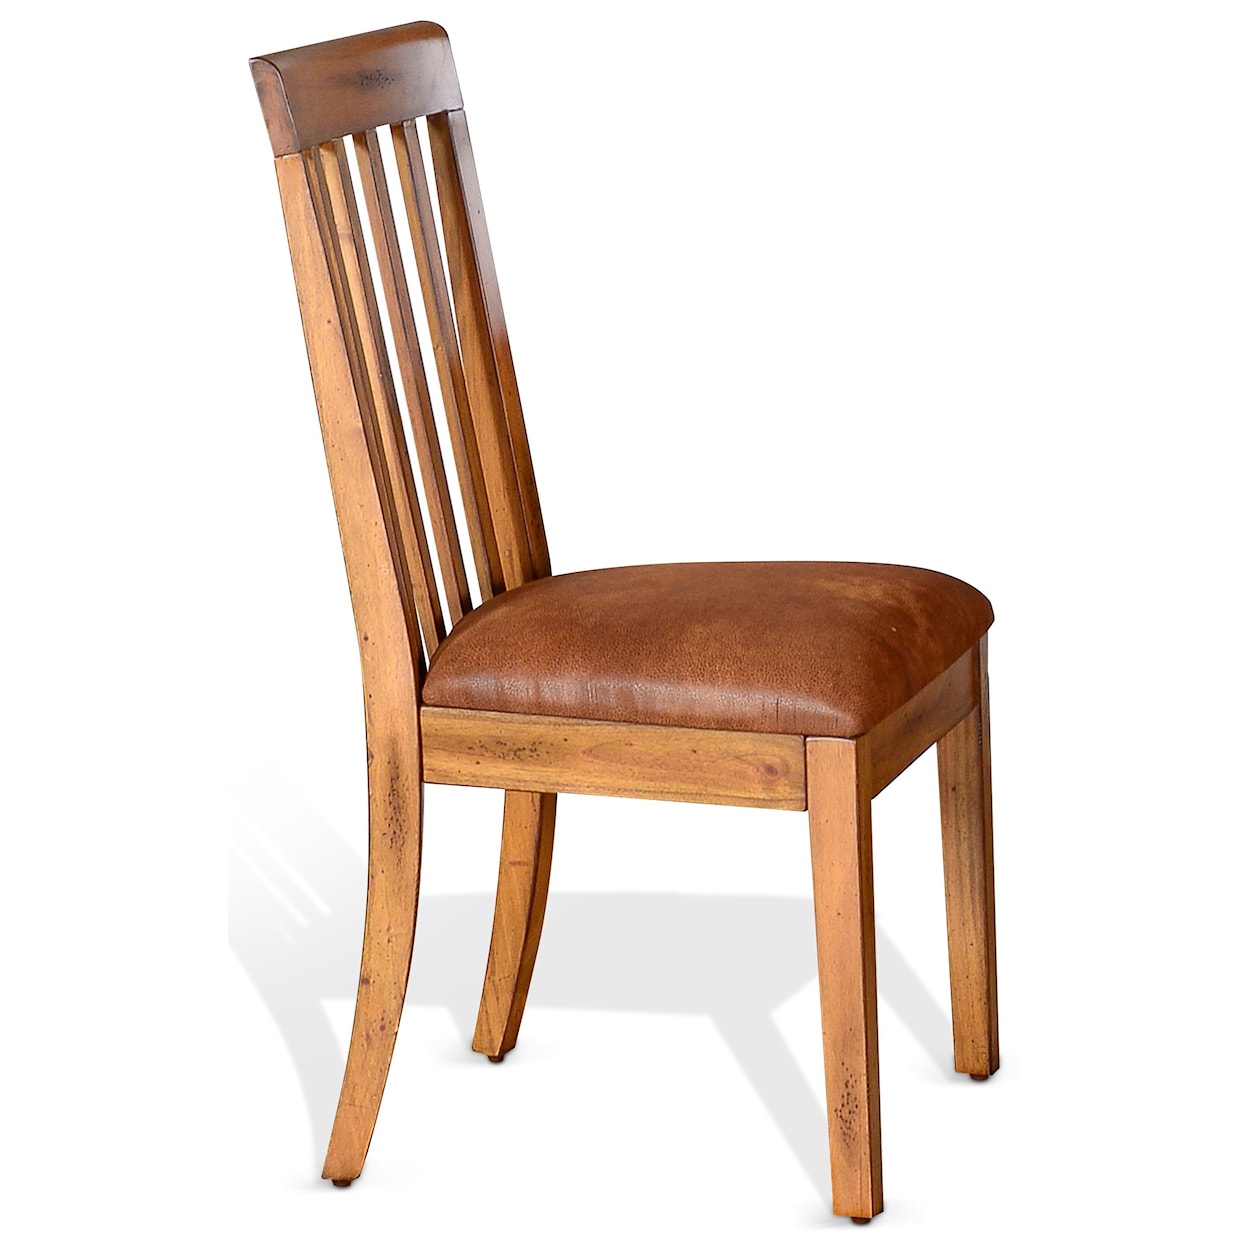 Sunny Designs   Slatback Chair